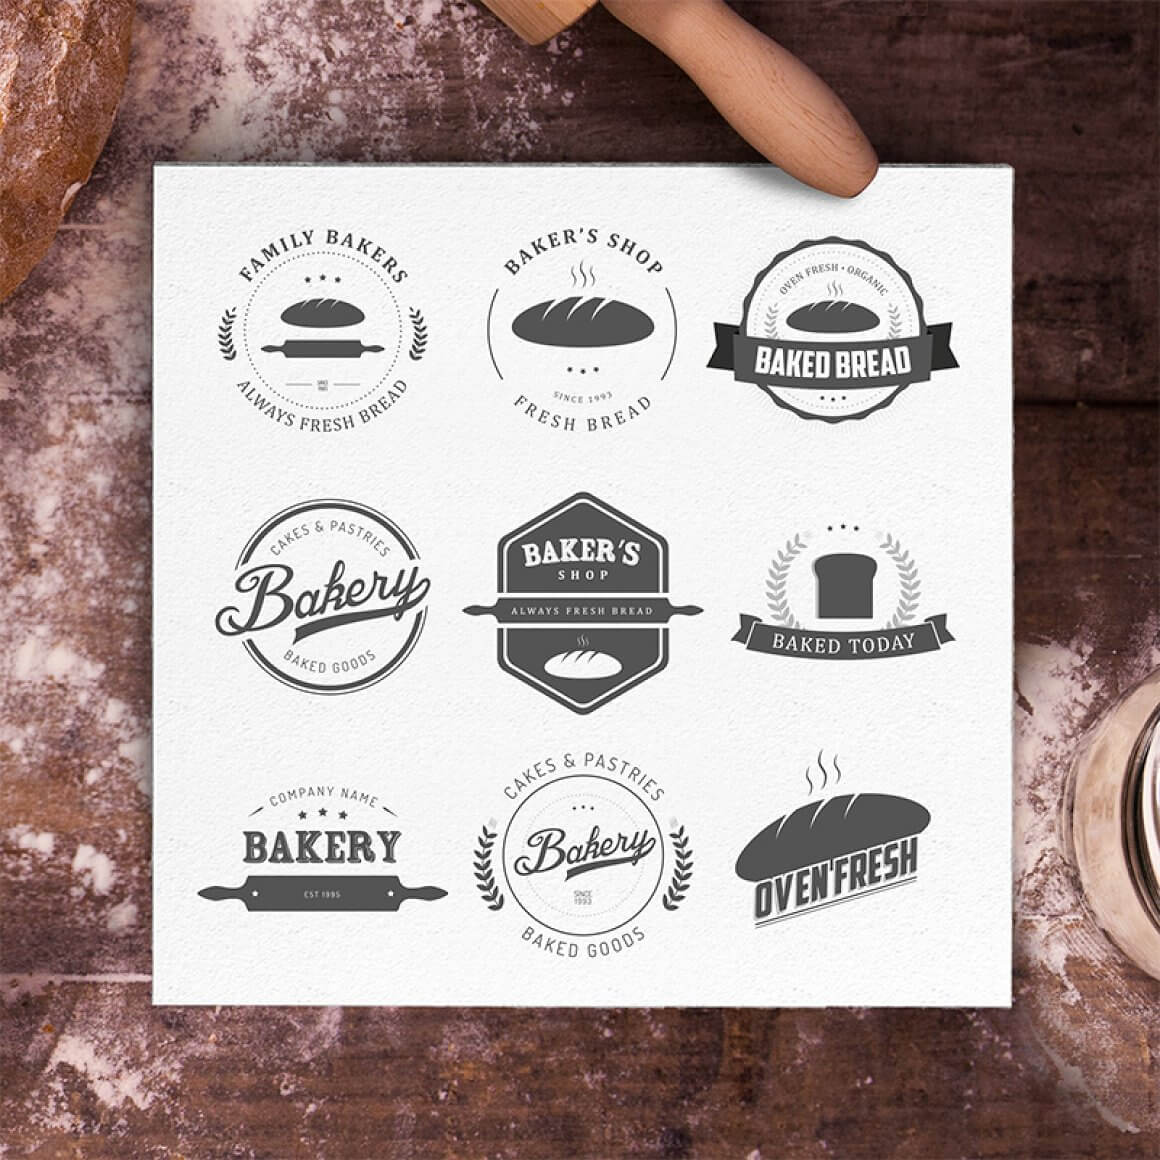 Logos "Baker's shop always fresh bread".